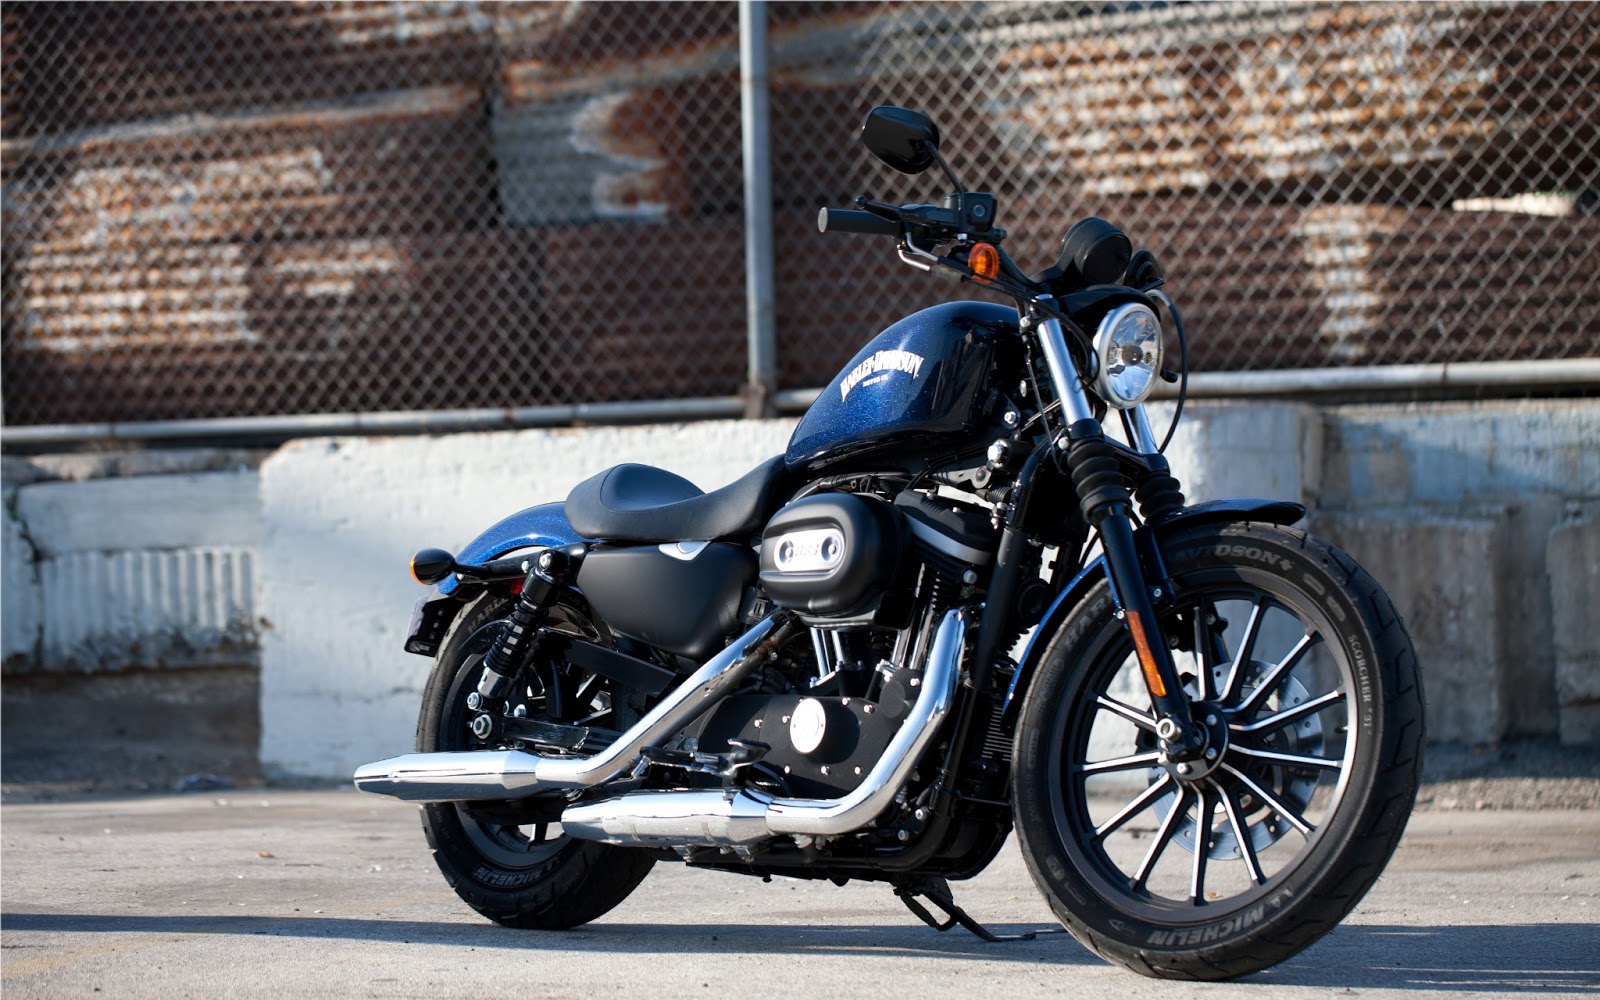 Harley Davidson Sportster Price In India Promotion Off61